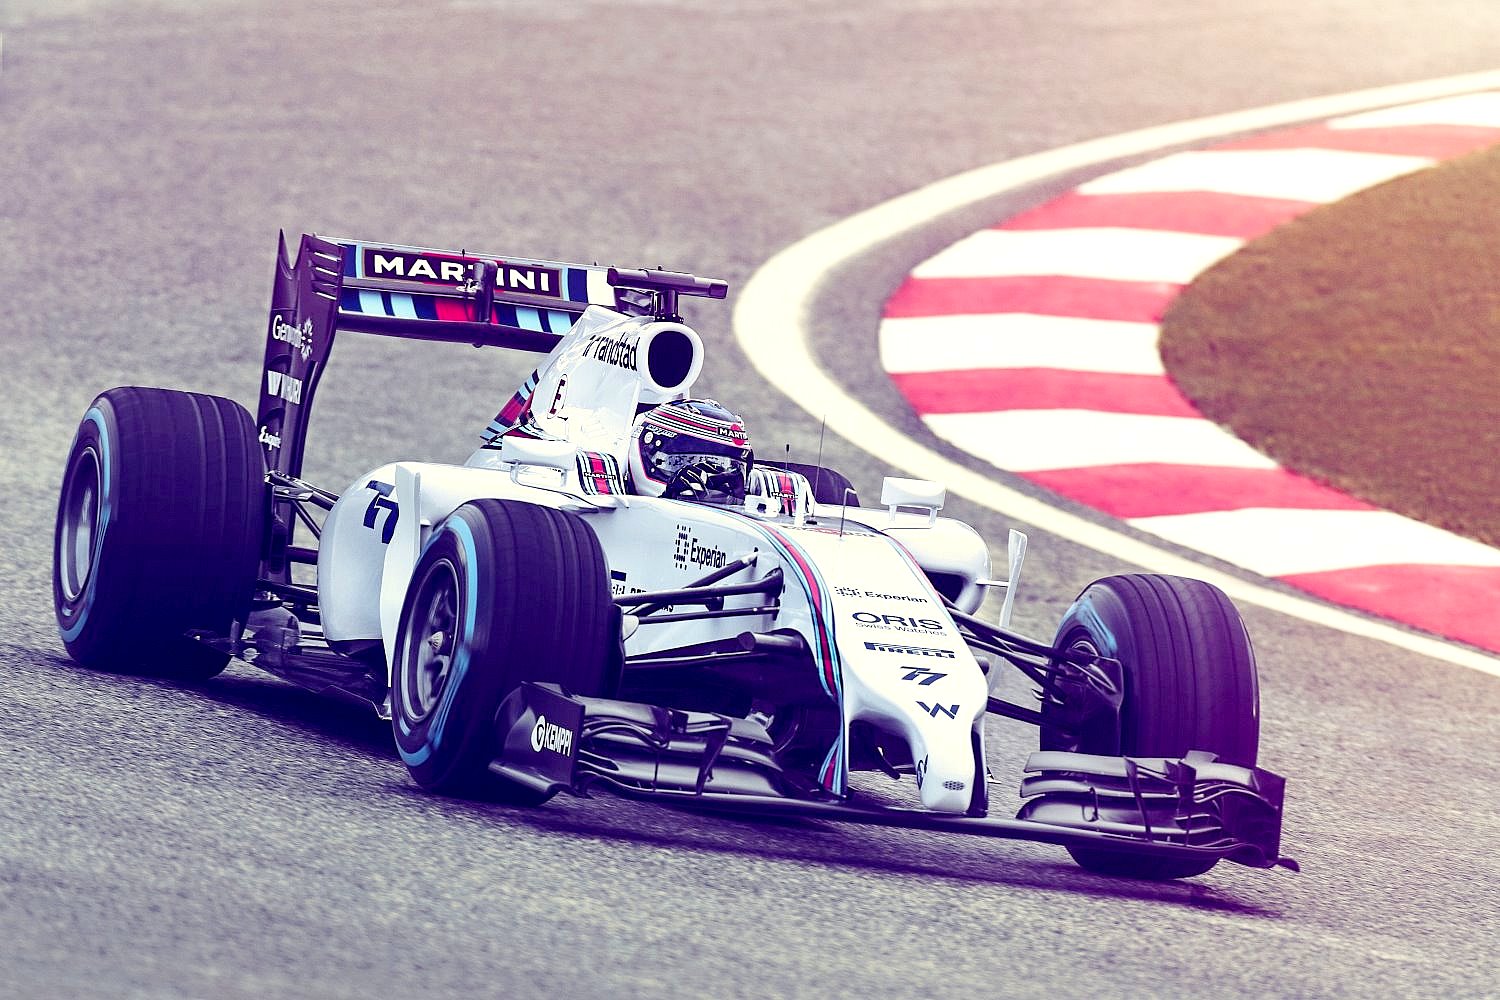 Kubica drove the Williams FW36